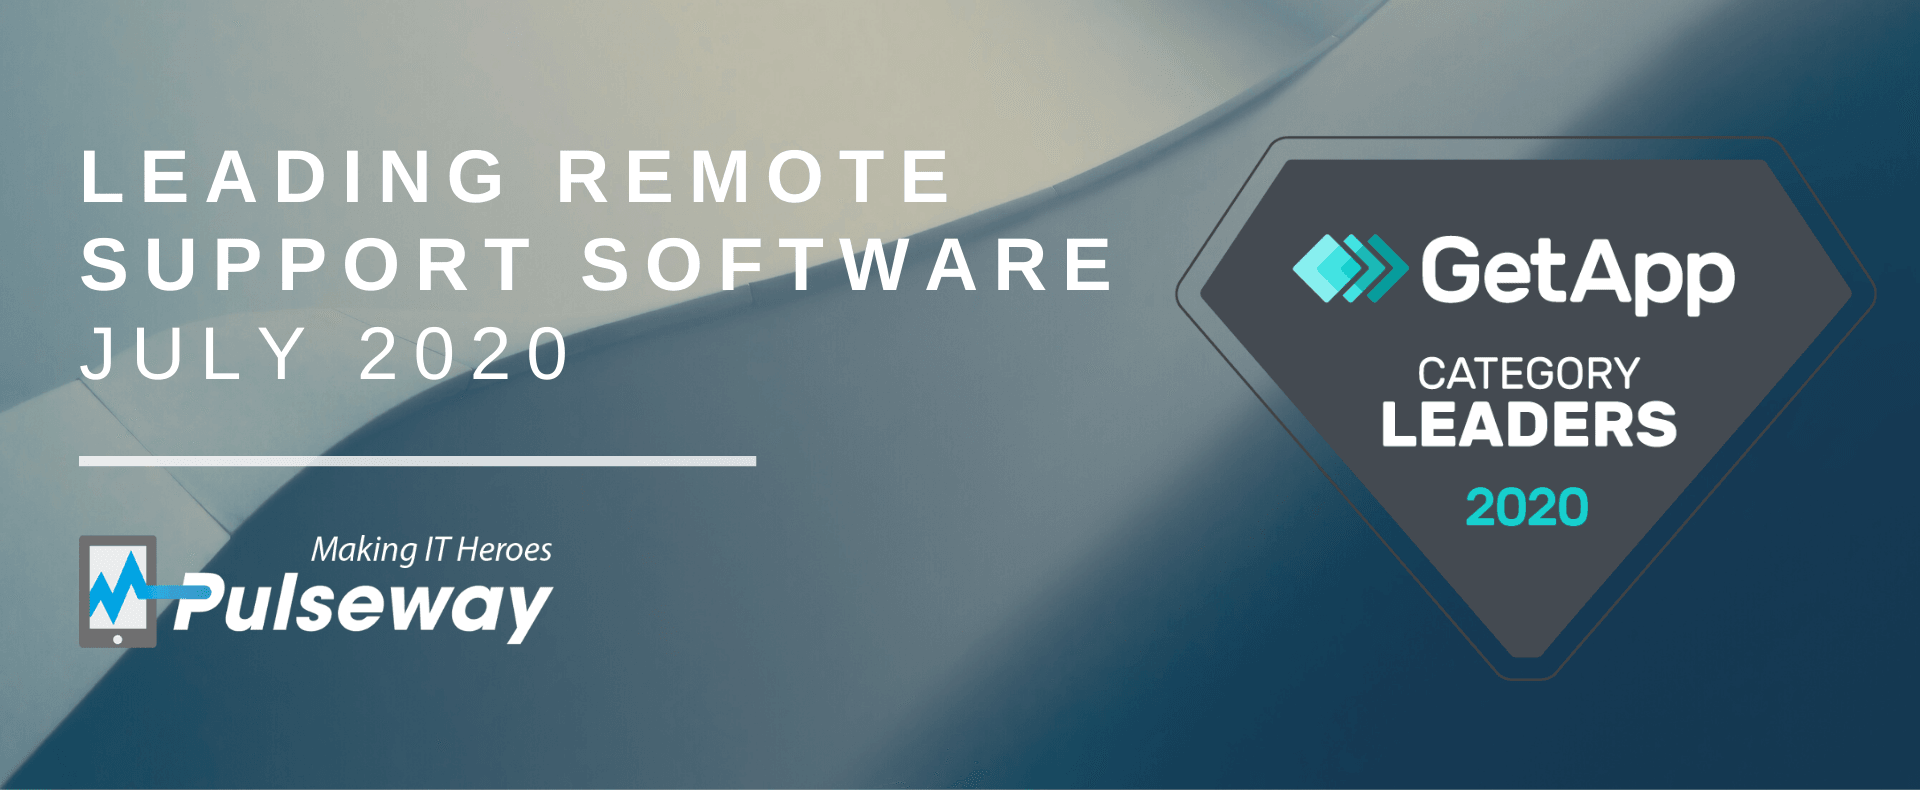 desktop management and remote support software